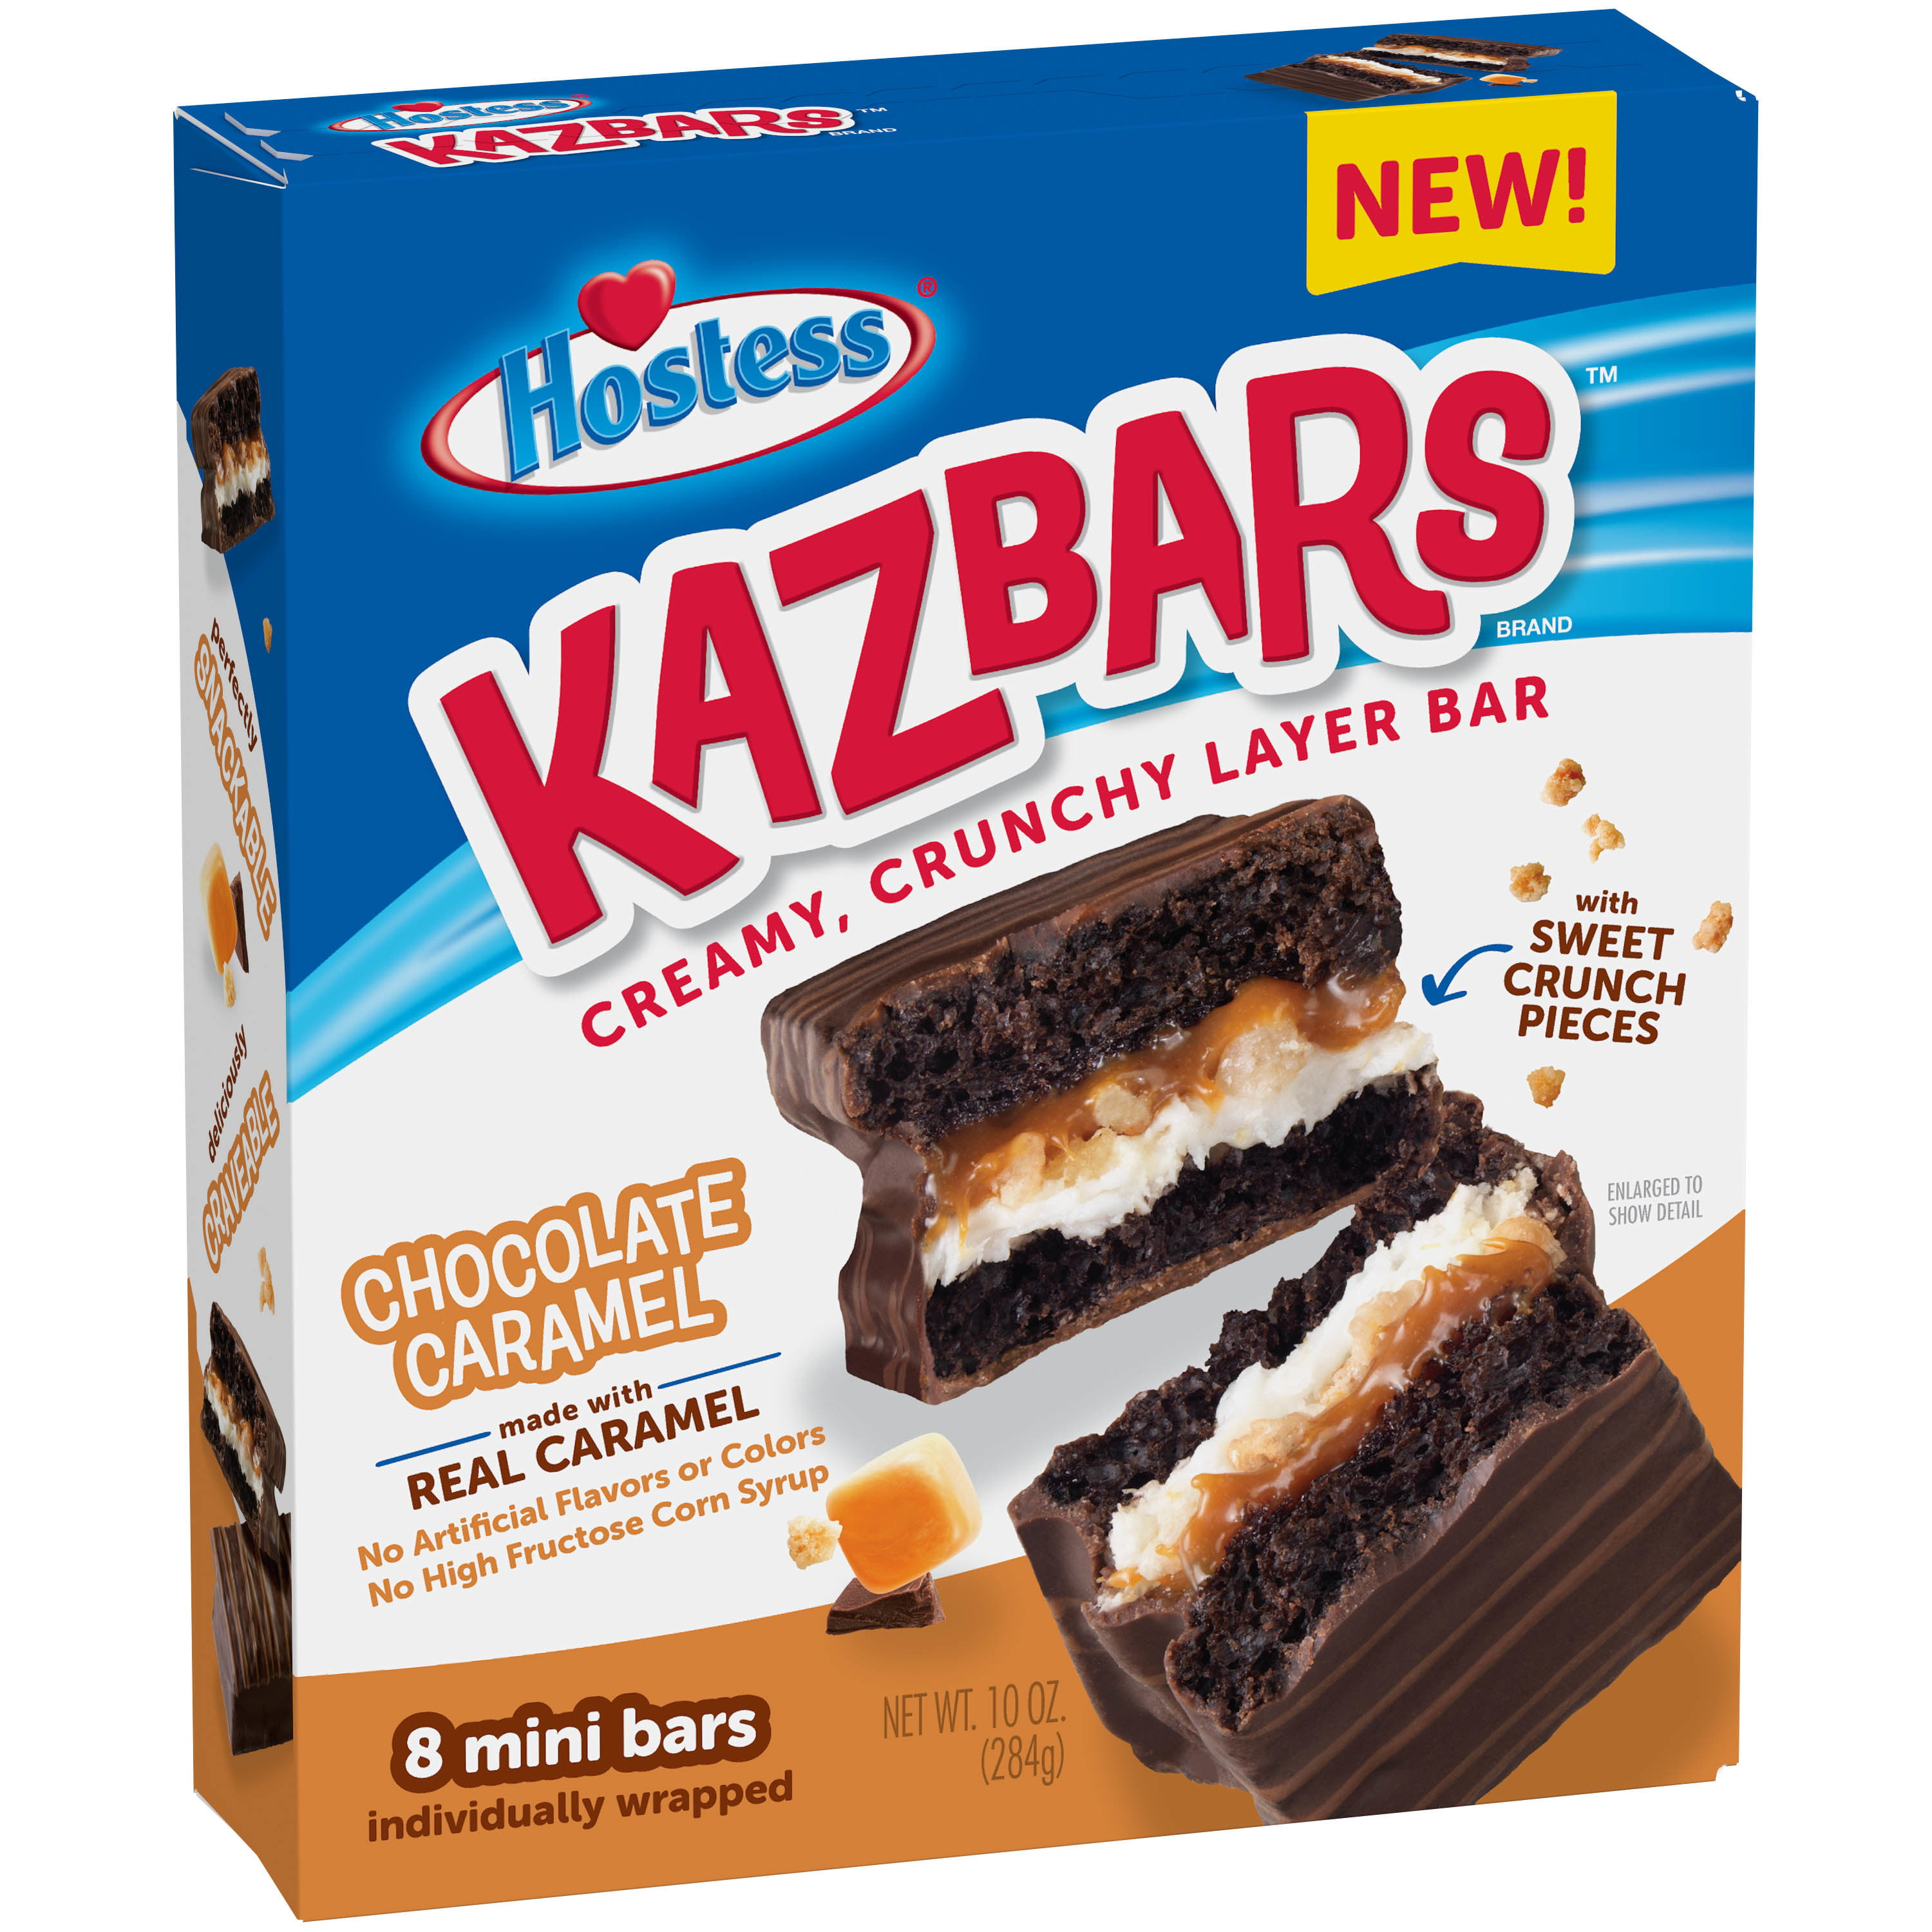 HOSTESS Chocolate Caramel KAZBARS Creamy and Crunchy Layer Bar